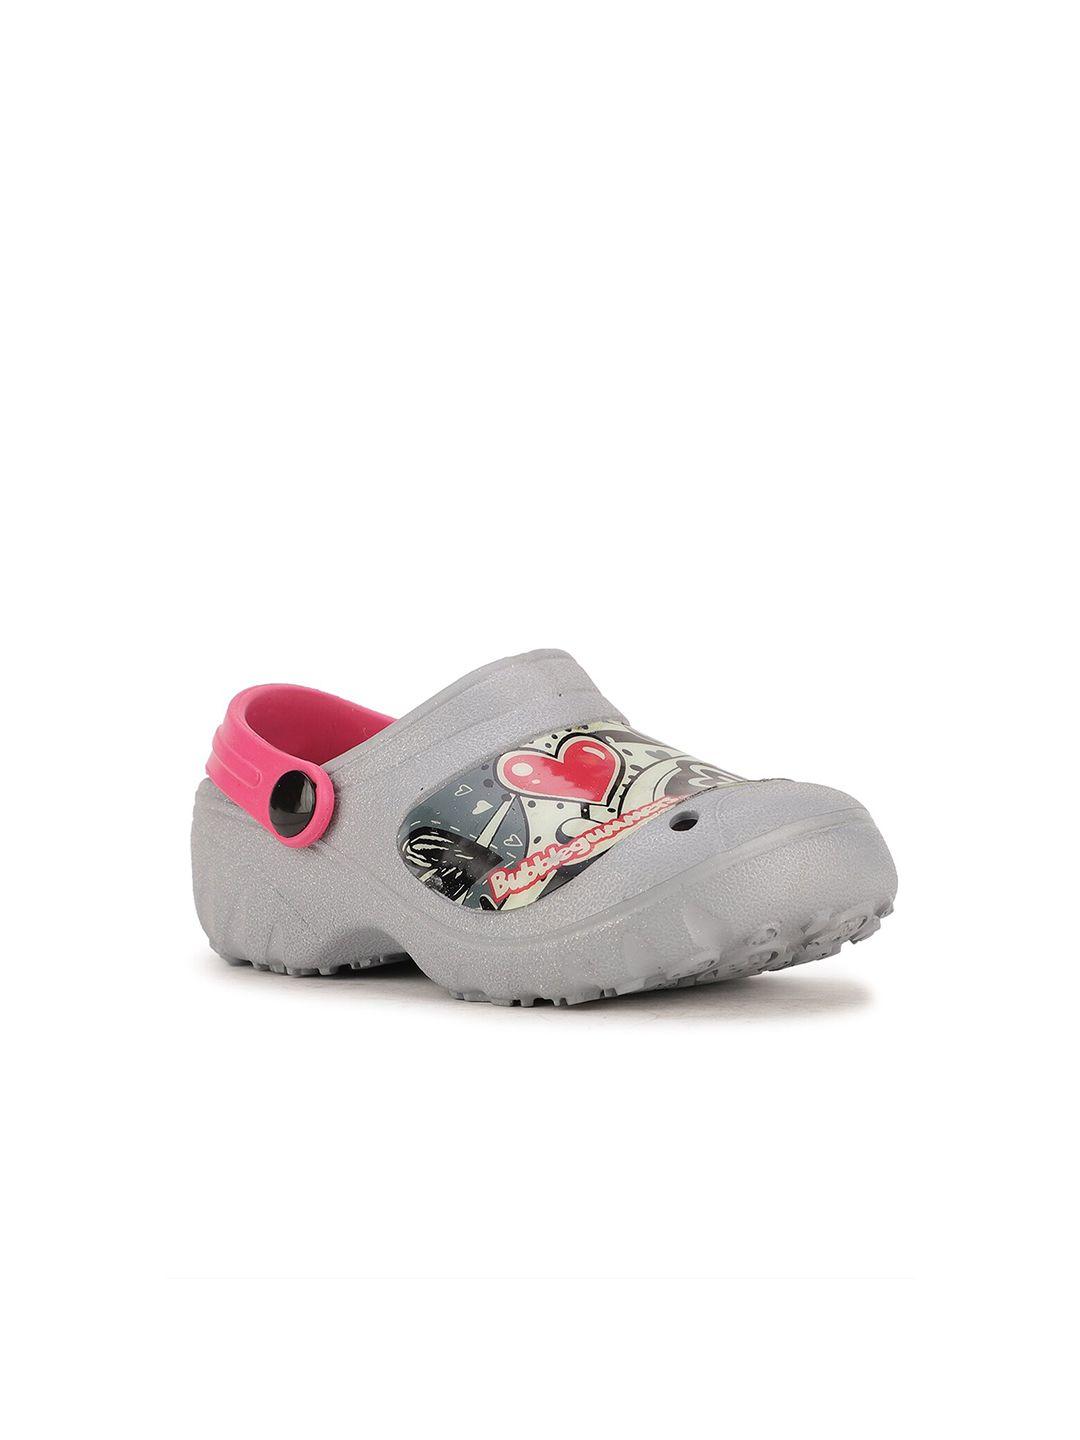 bubblegummers boys grey & pink clogs sandals